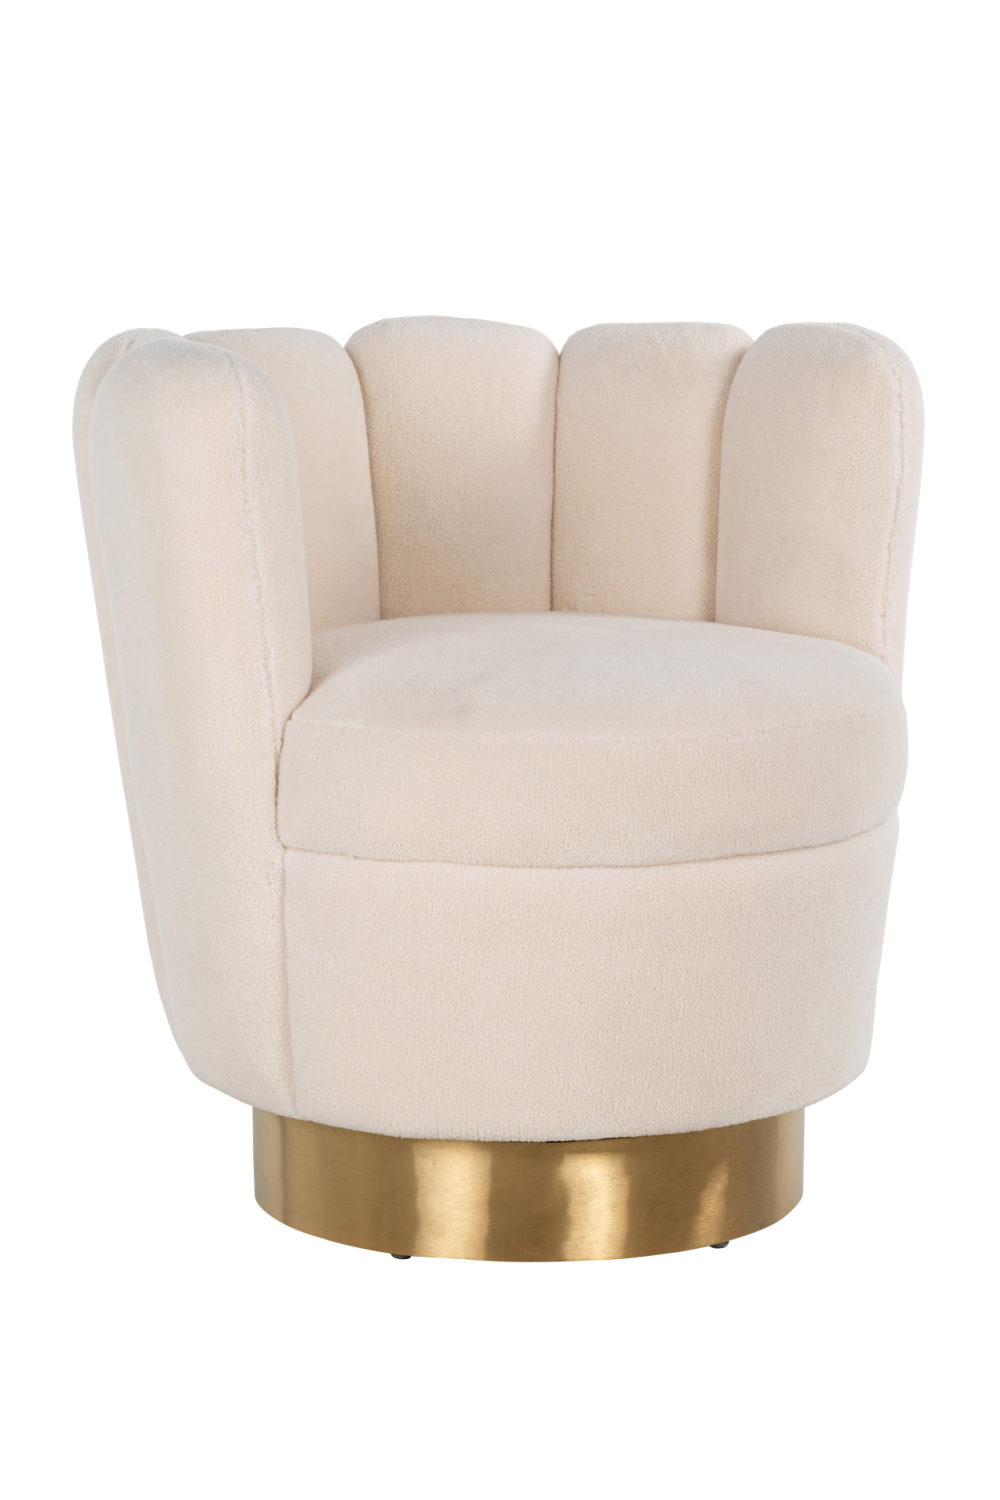 Round White Easy Chair | OROA Mayfair | Oroa.com